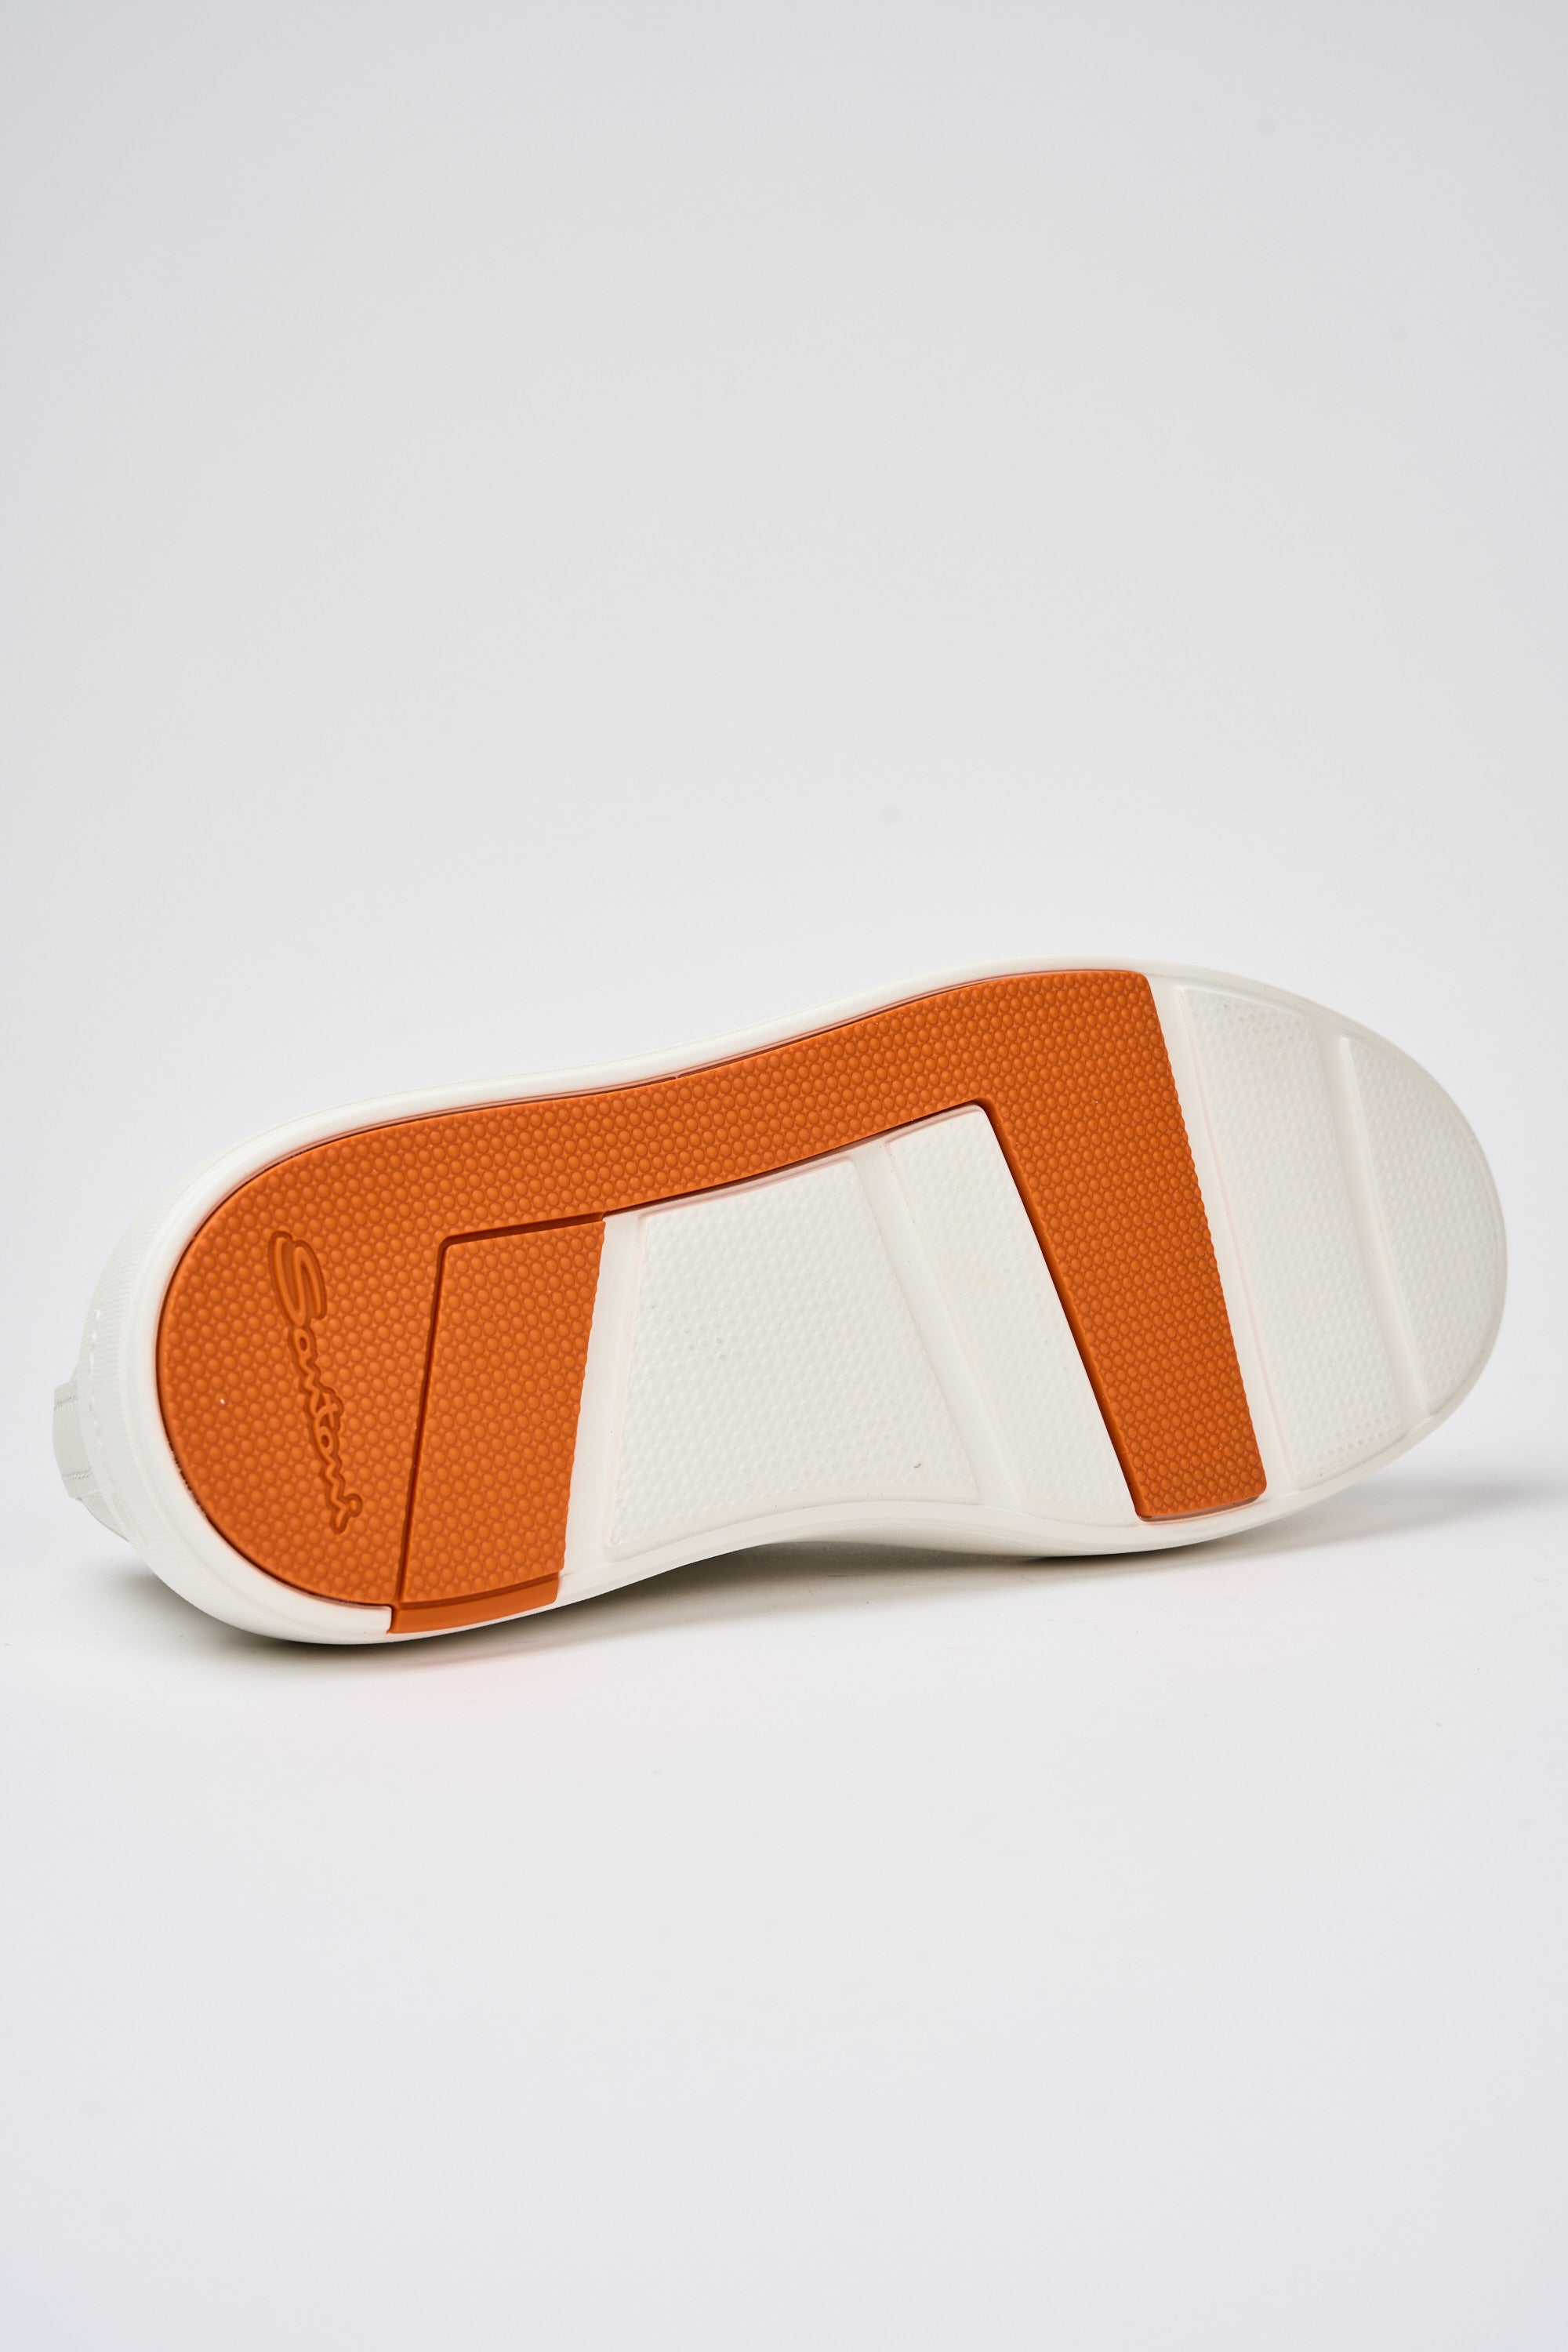 Santoni Leather Tumbled Sneakers White-6